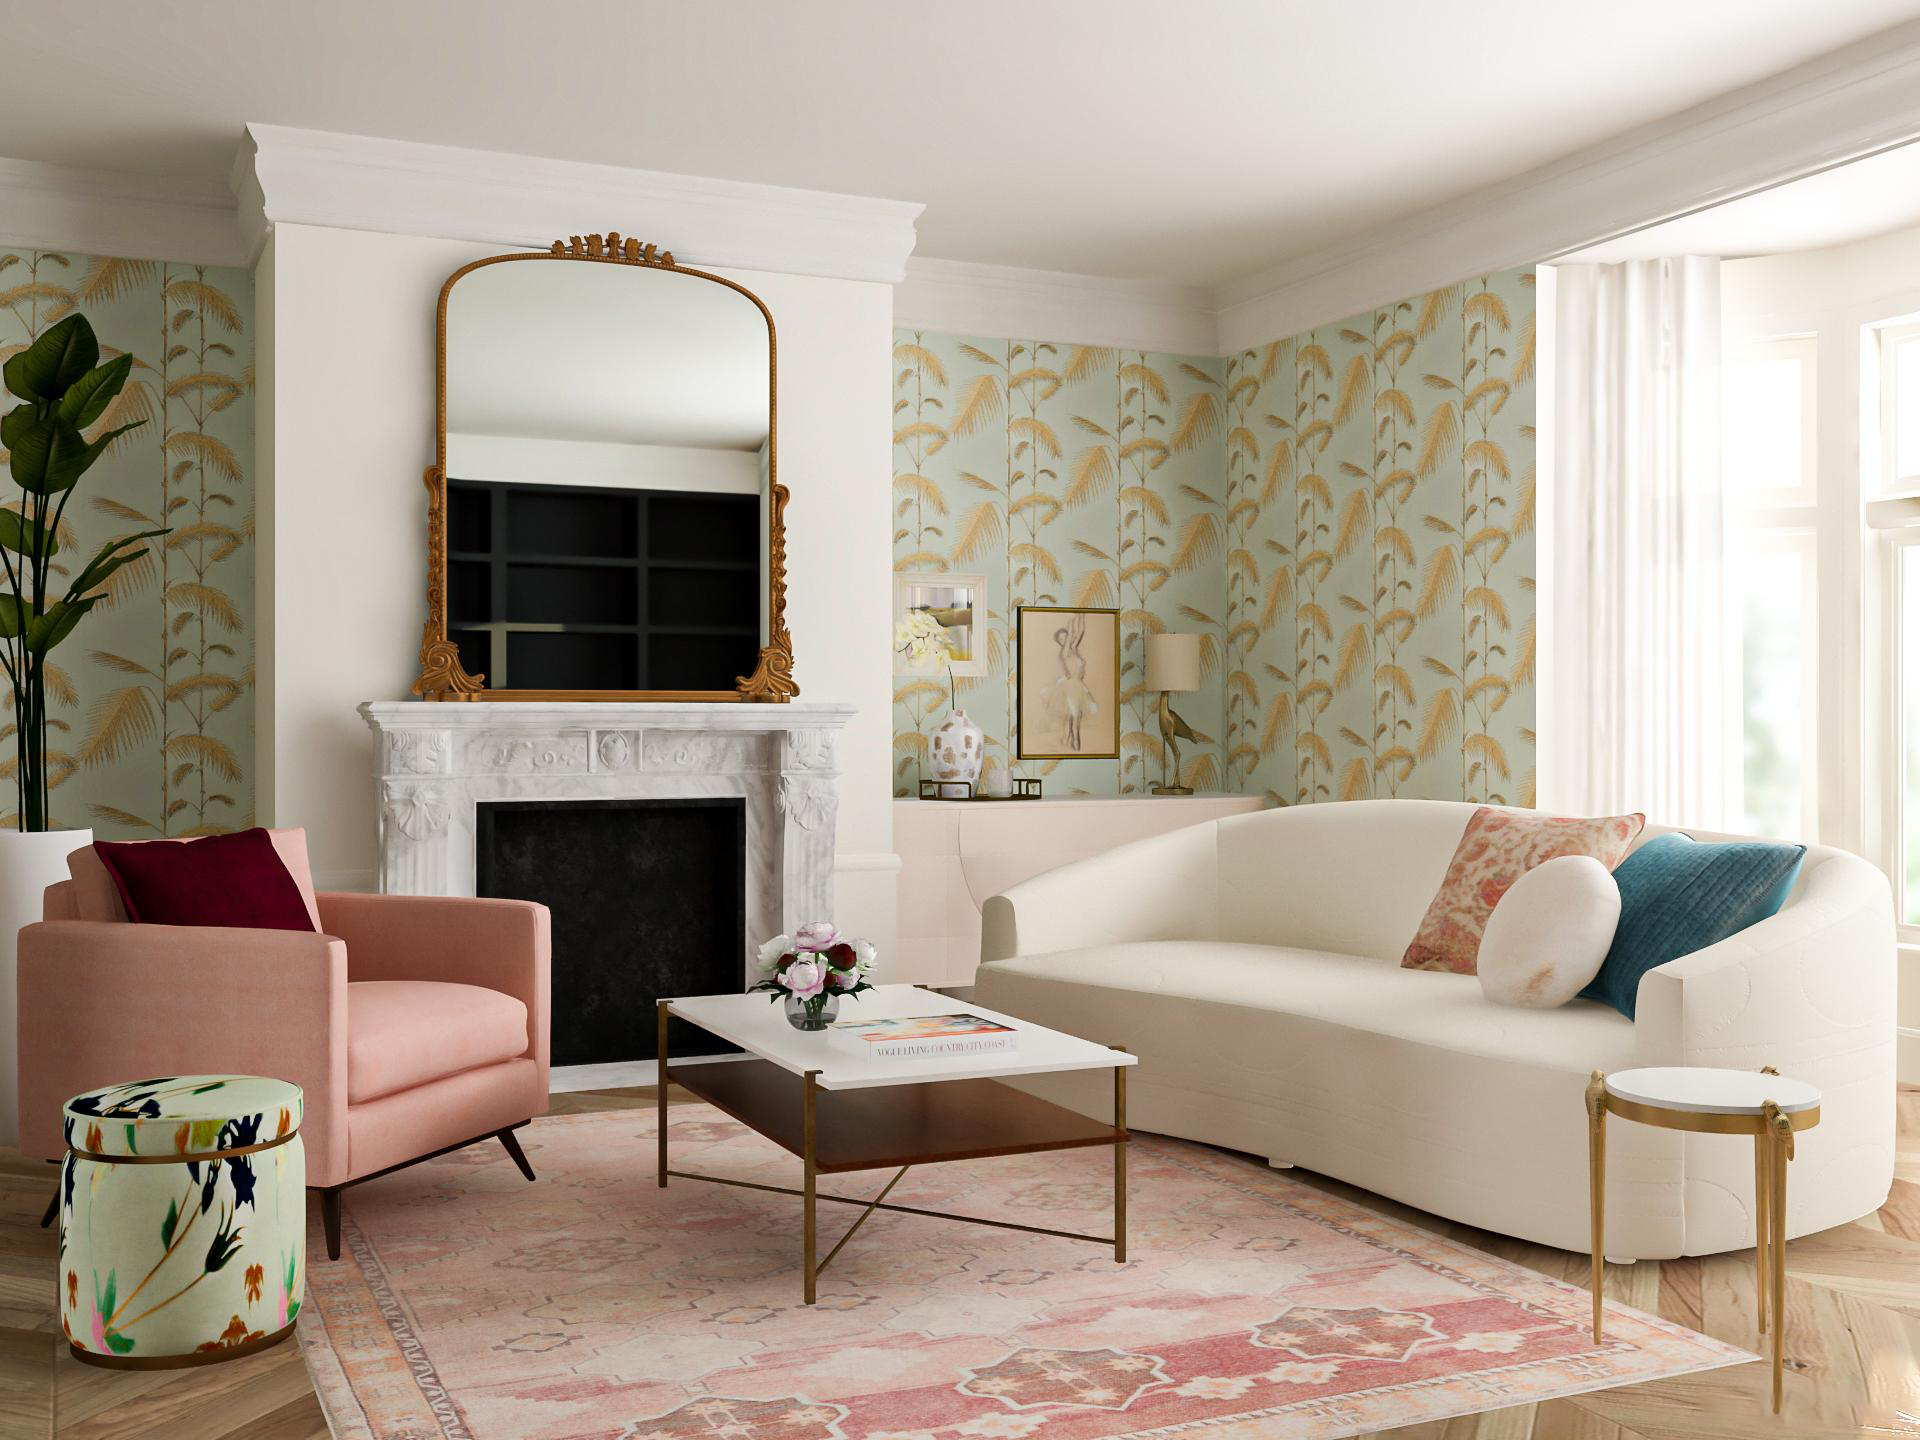 Residential/Living Room Interior Design Ideas - Elegance Interior